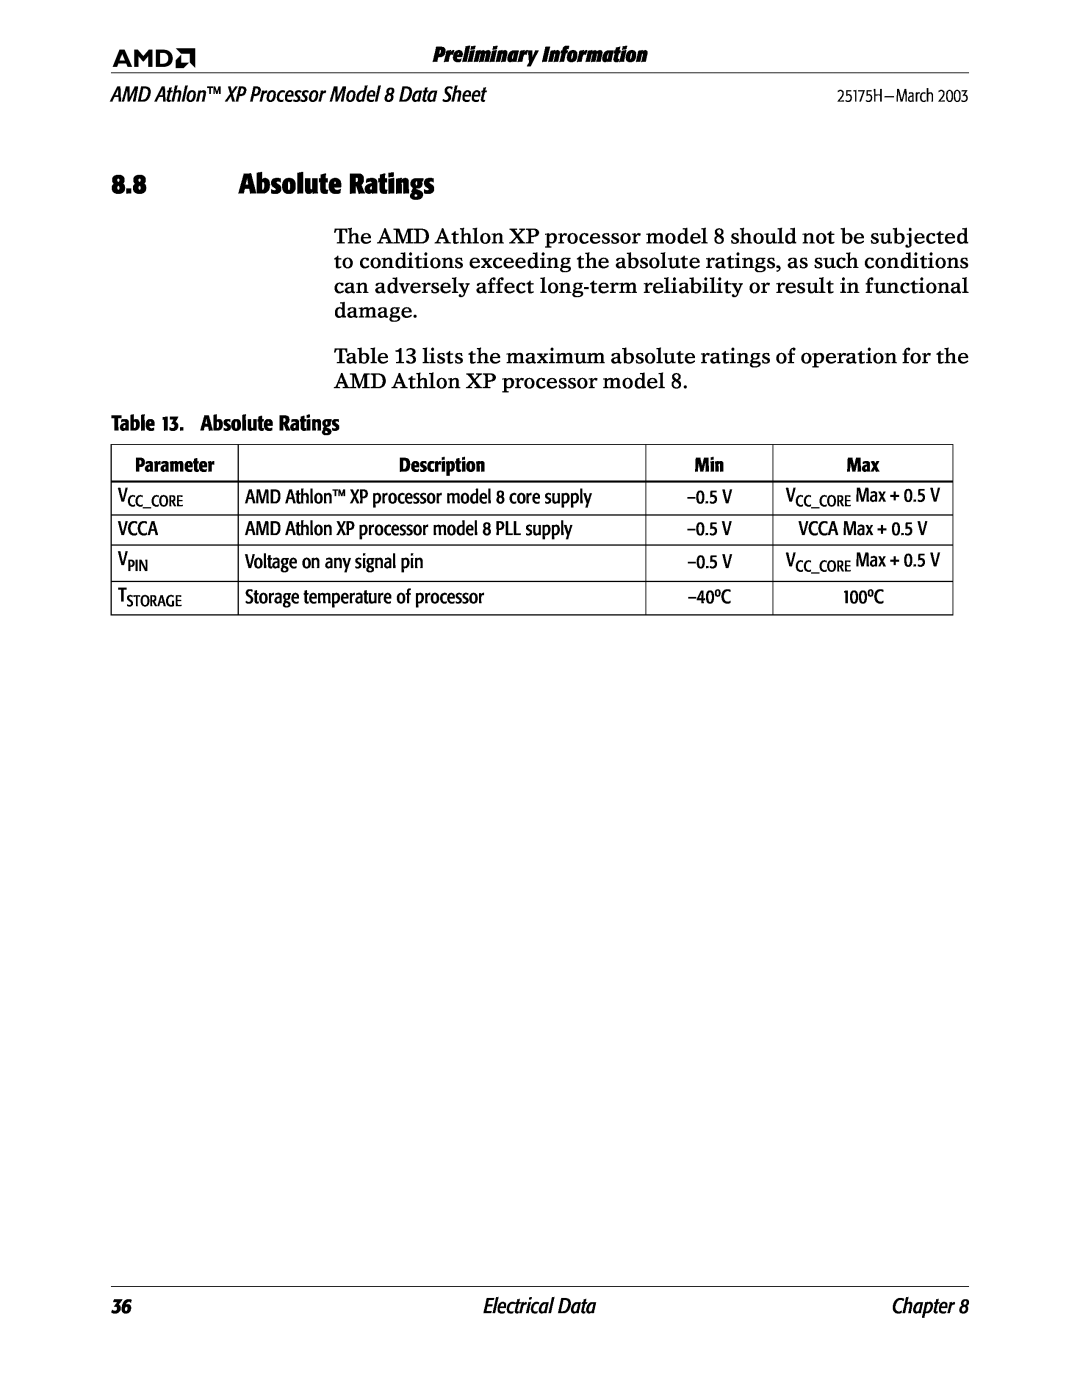 AMD manual Absolute Ratings, Preliminary Information, AMD Athlon XP Processor Model 8 Data Sheet, Electrical Data 